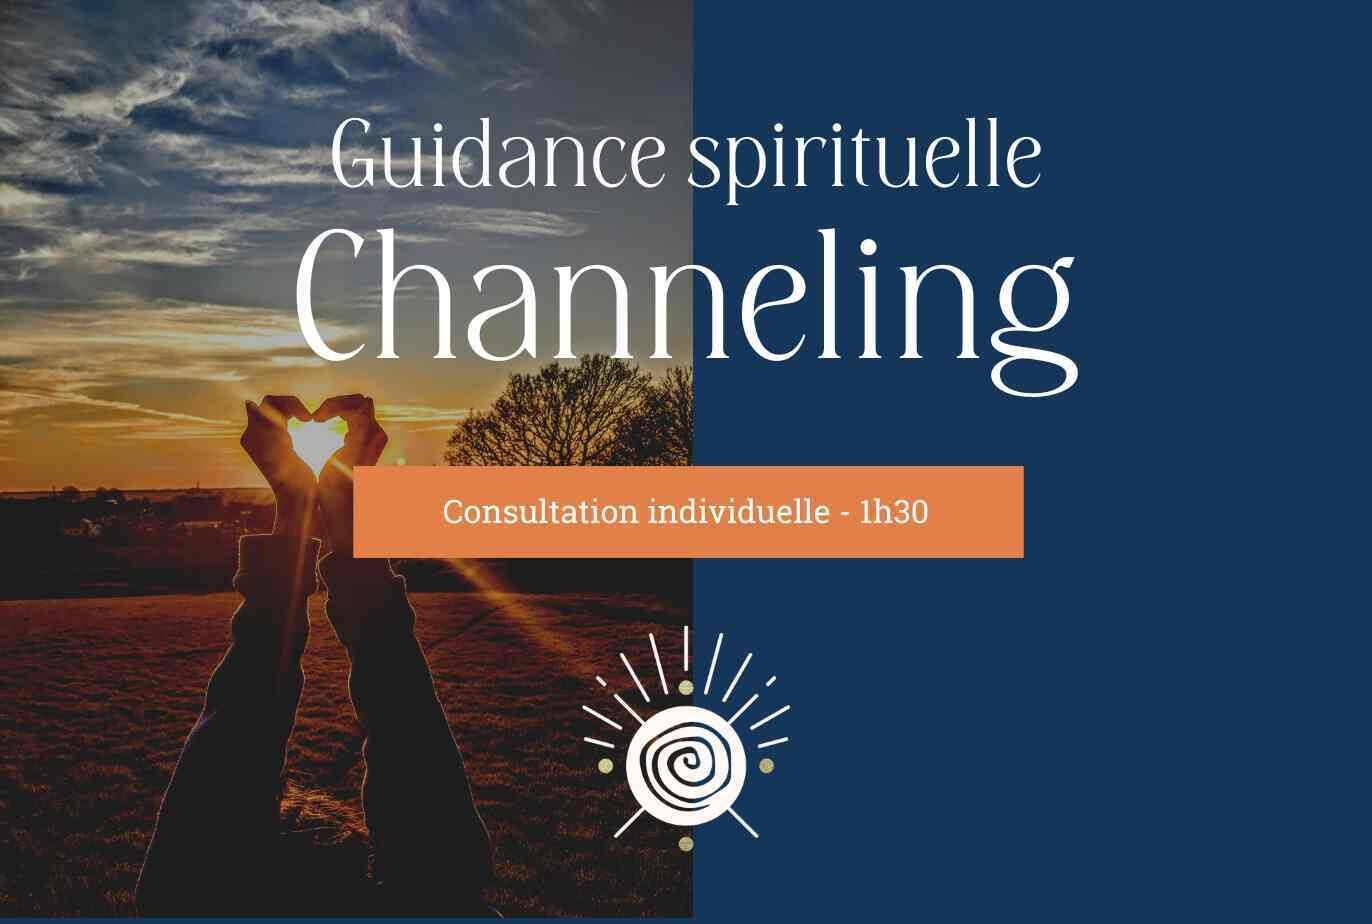 Channeling - Guidance spirituelle